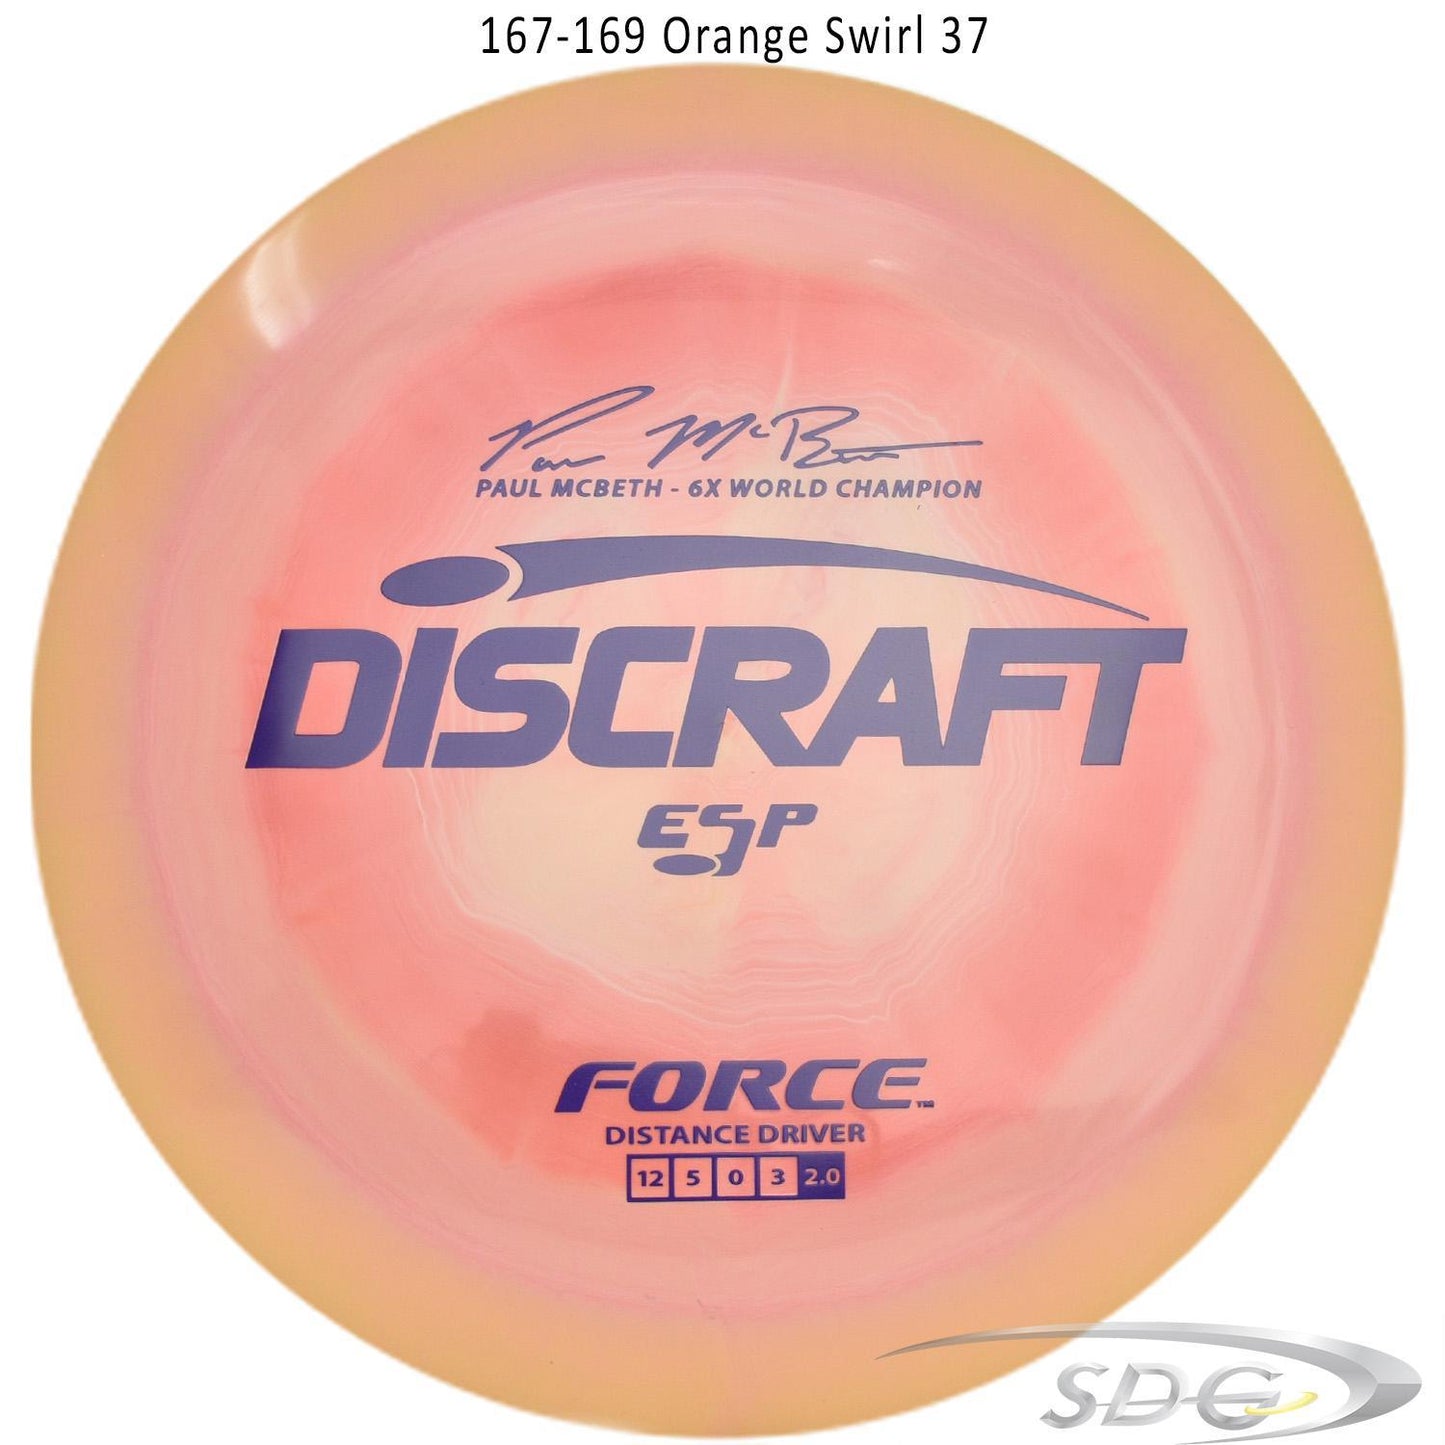 discraft-esp-force-6x-paul-mcbeth-signature-disc-golf-distance-driver-169-160-weights 167-169 Orange Swirl 37 